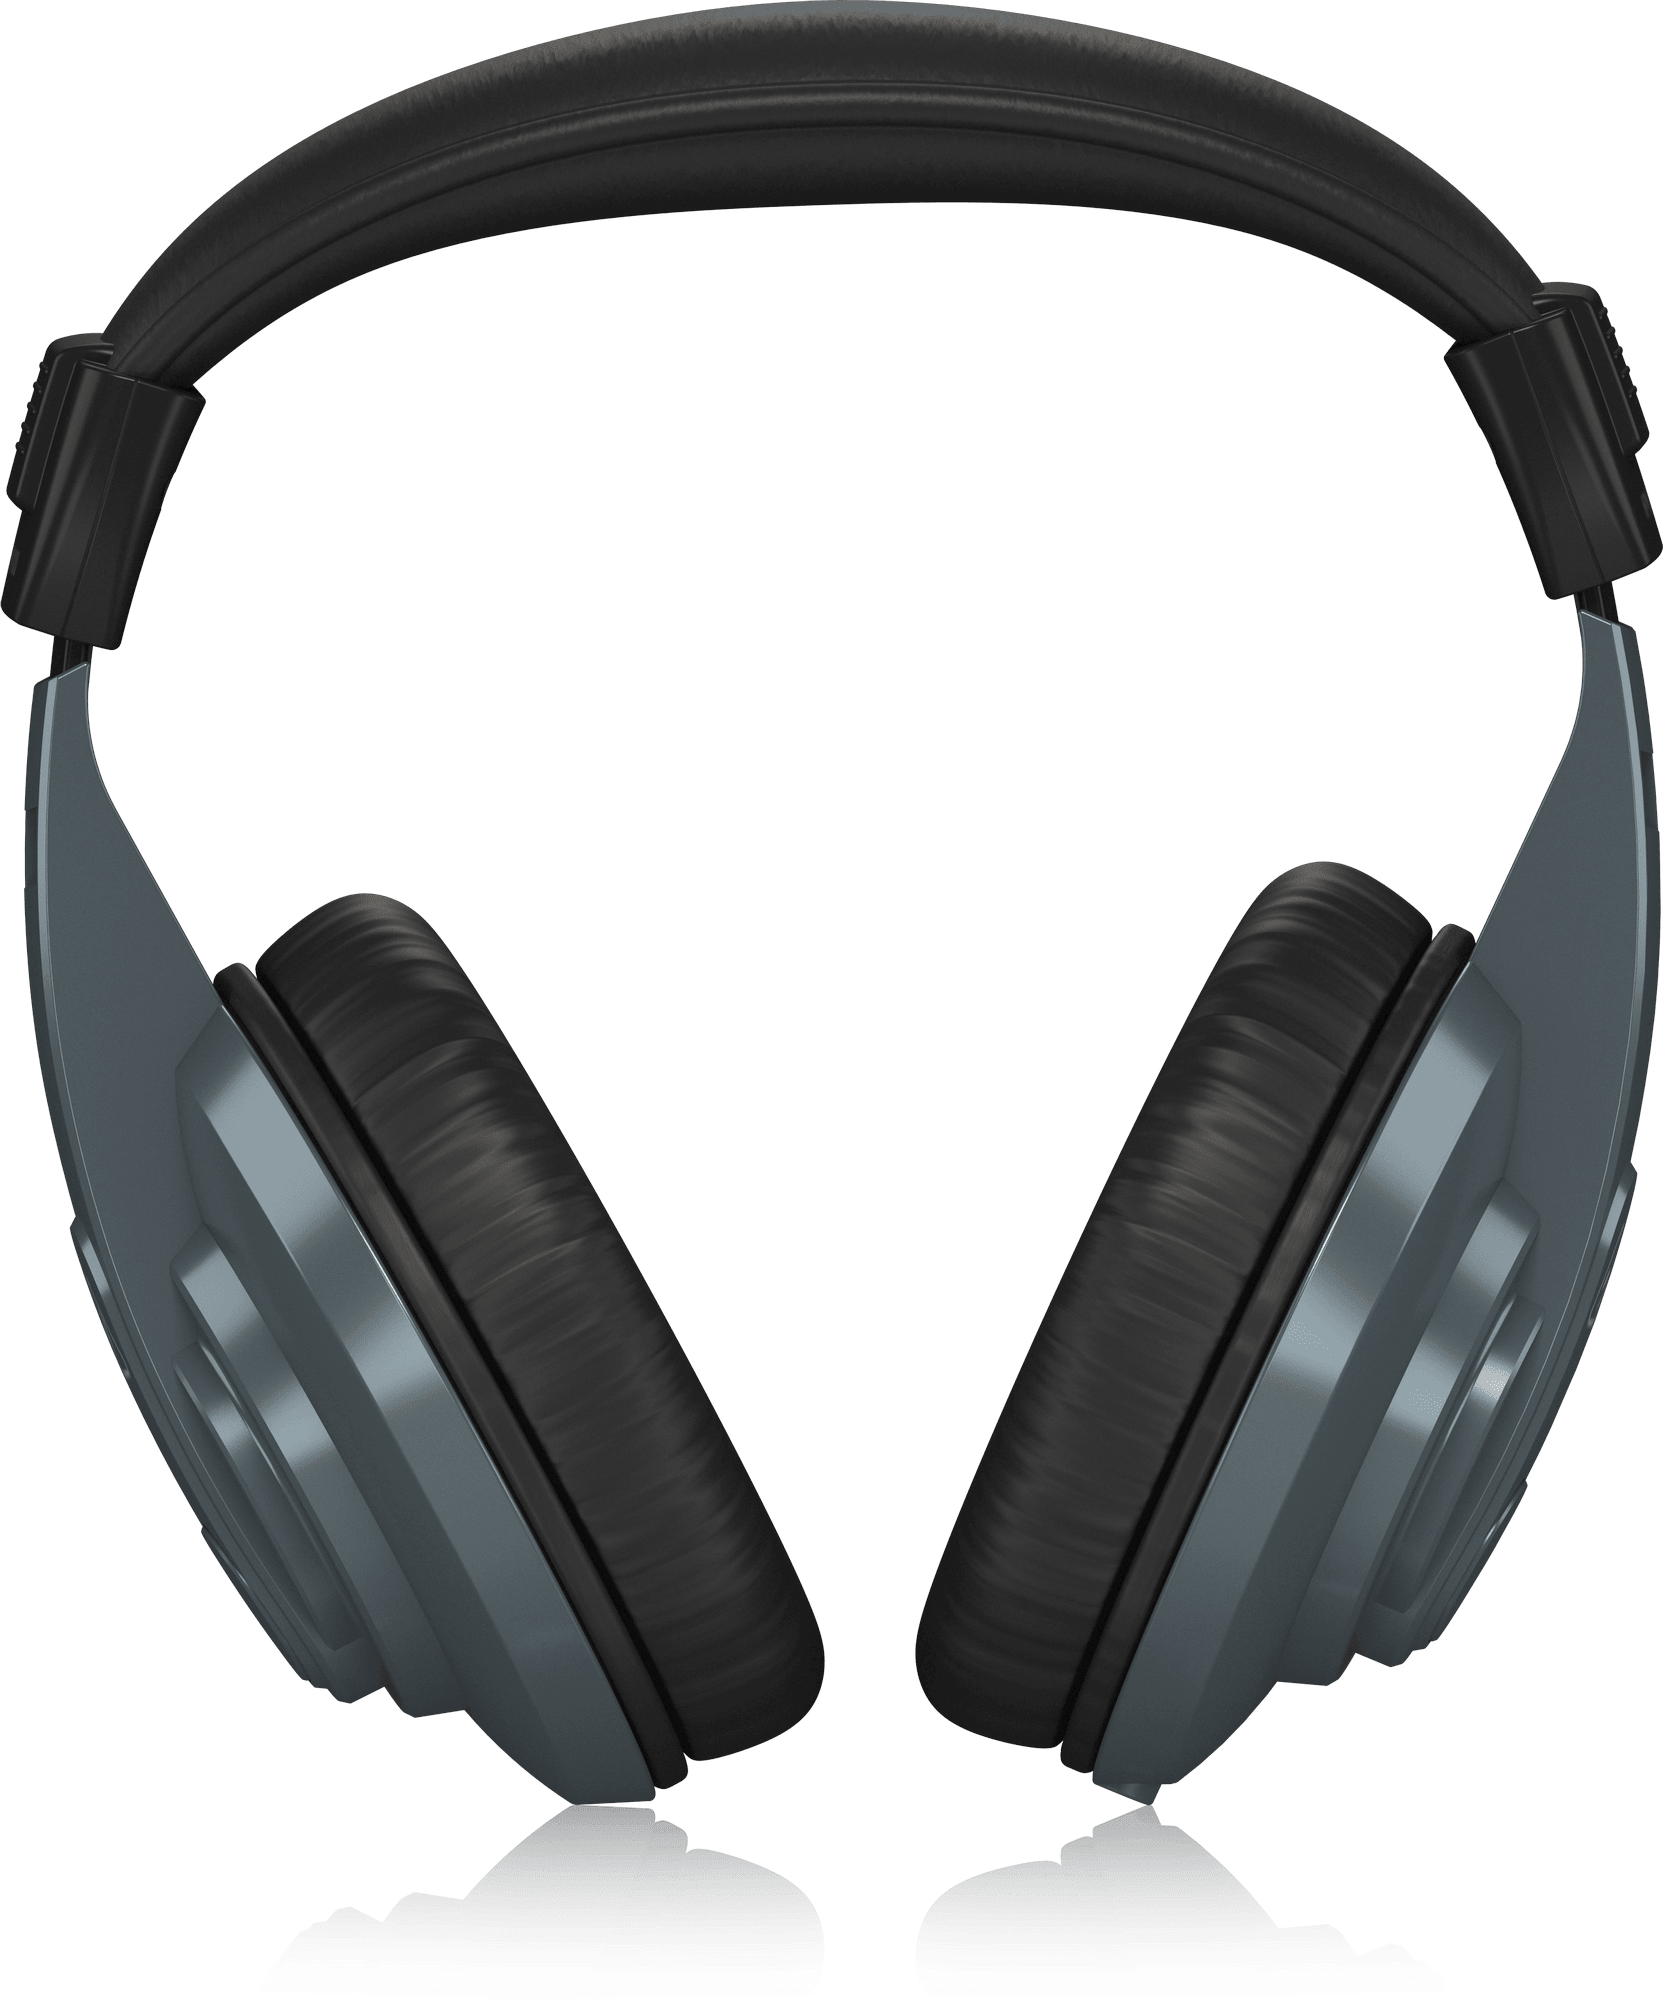 Behringer HPM1100 Multi-Purpose Headphones | BEHRINGER , Zoso Music